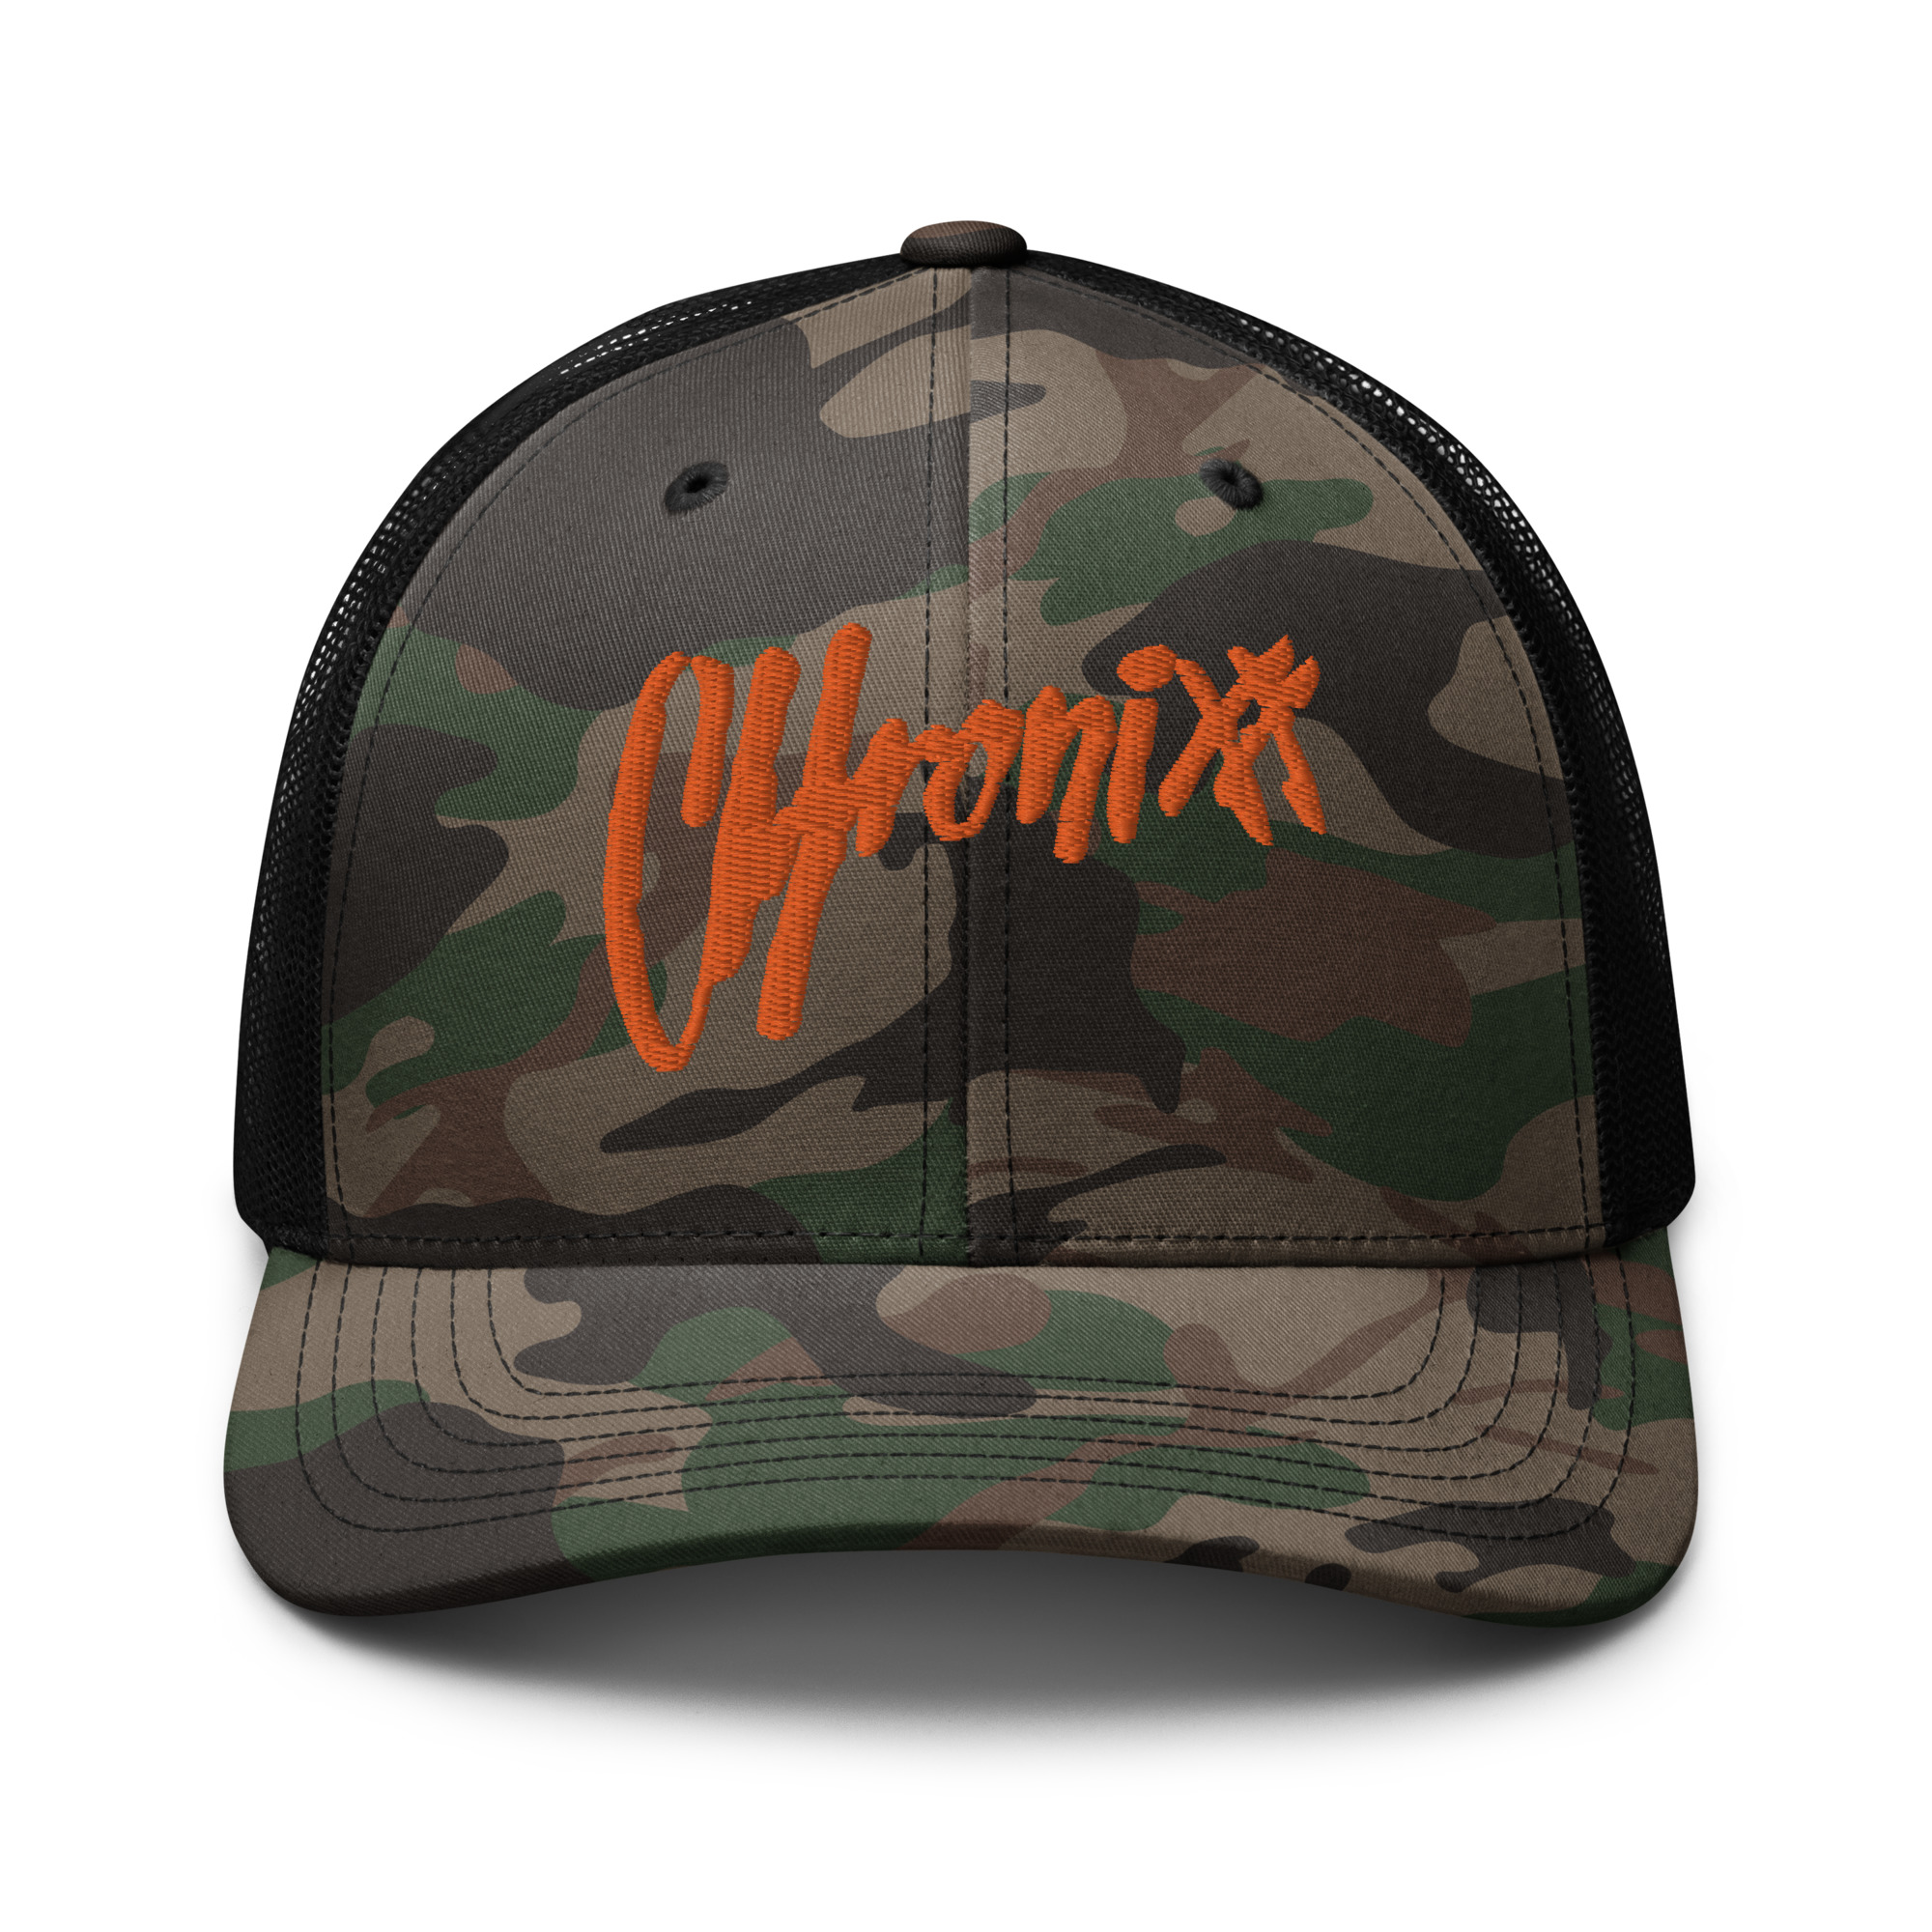 Chronixx camouflage trucker cap